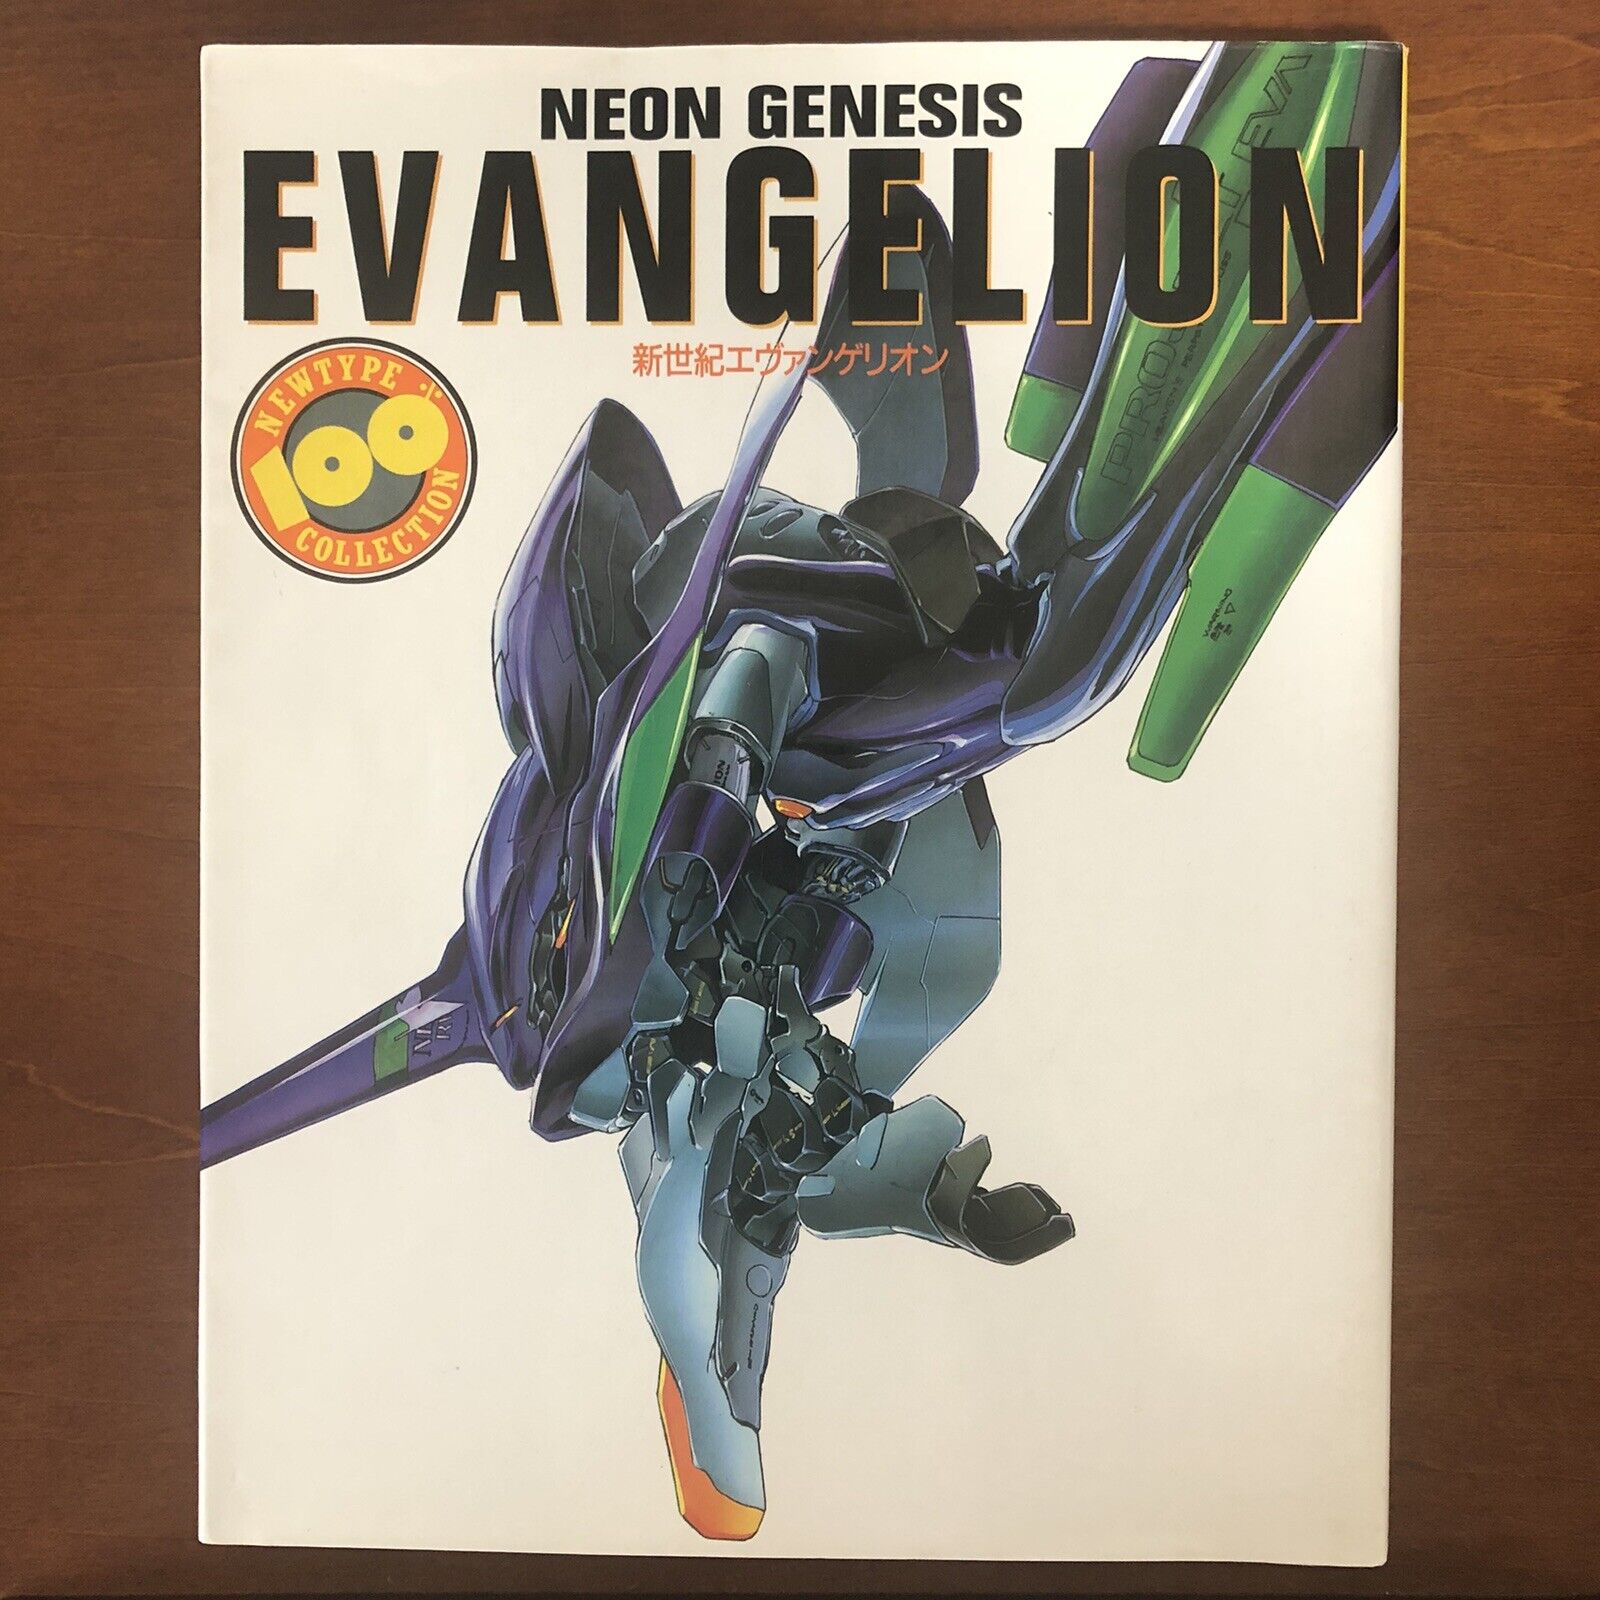 Neon Genesis Evangelion Material Newtype 100 Collection Art Book Illustration